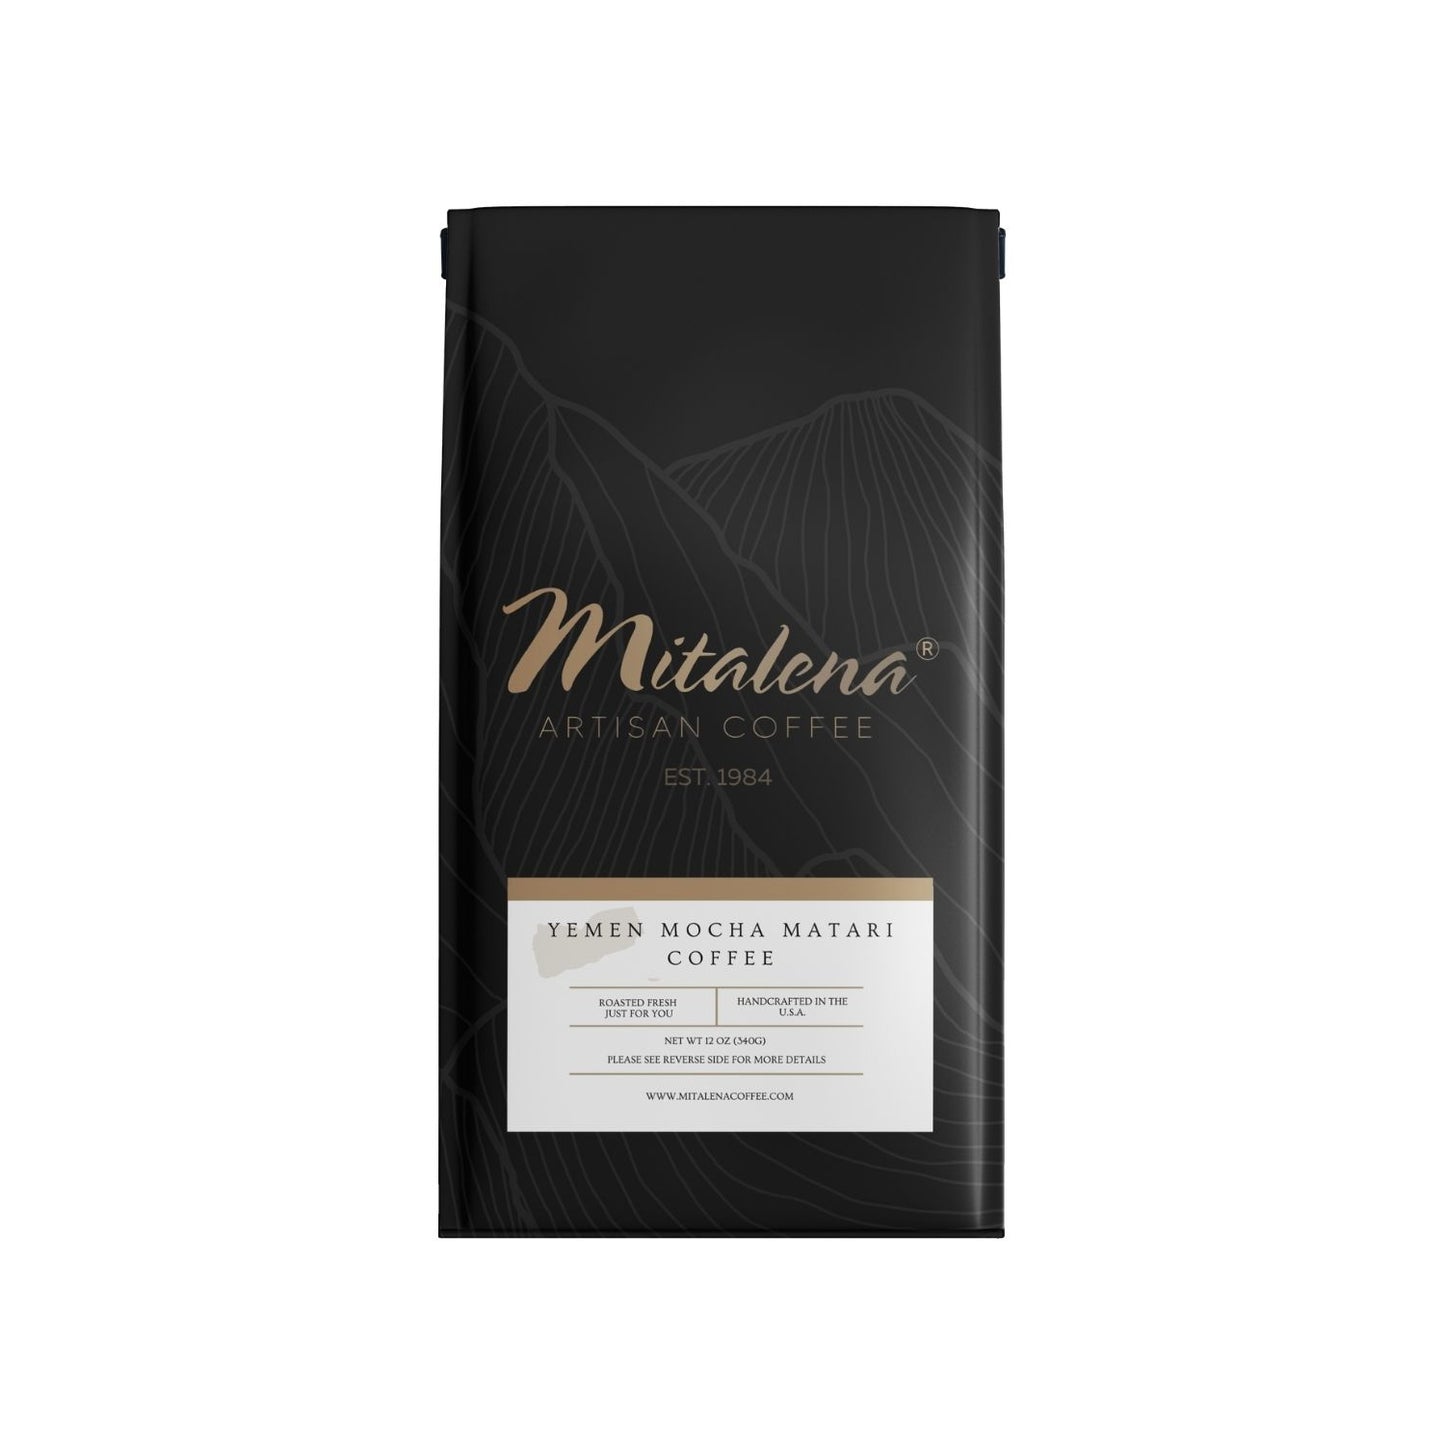 Mitalena Coffee - Yemen Mocha Matari Coffee, 12 oz.